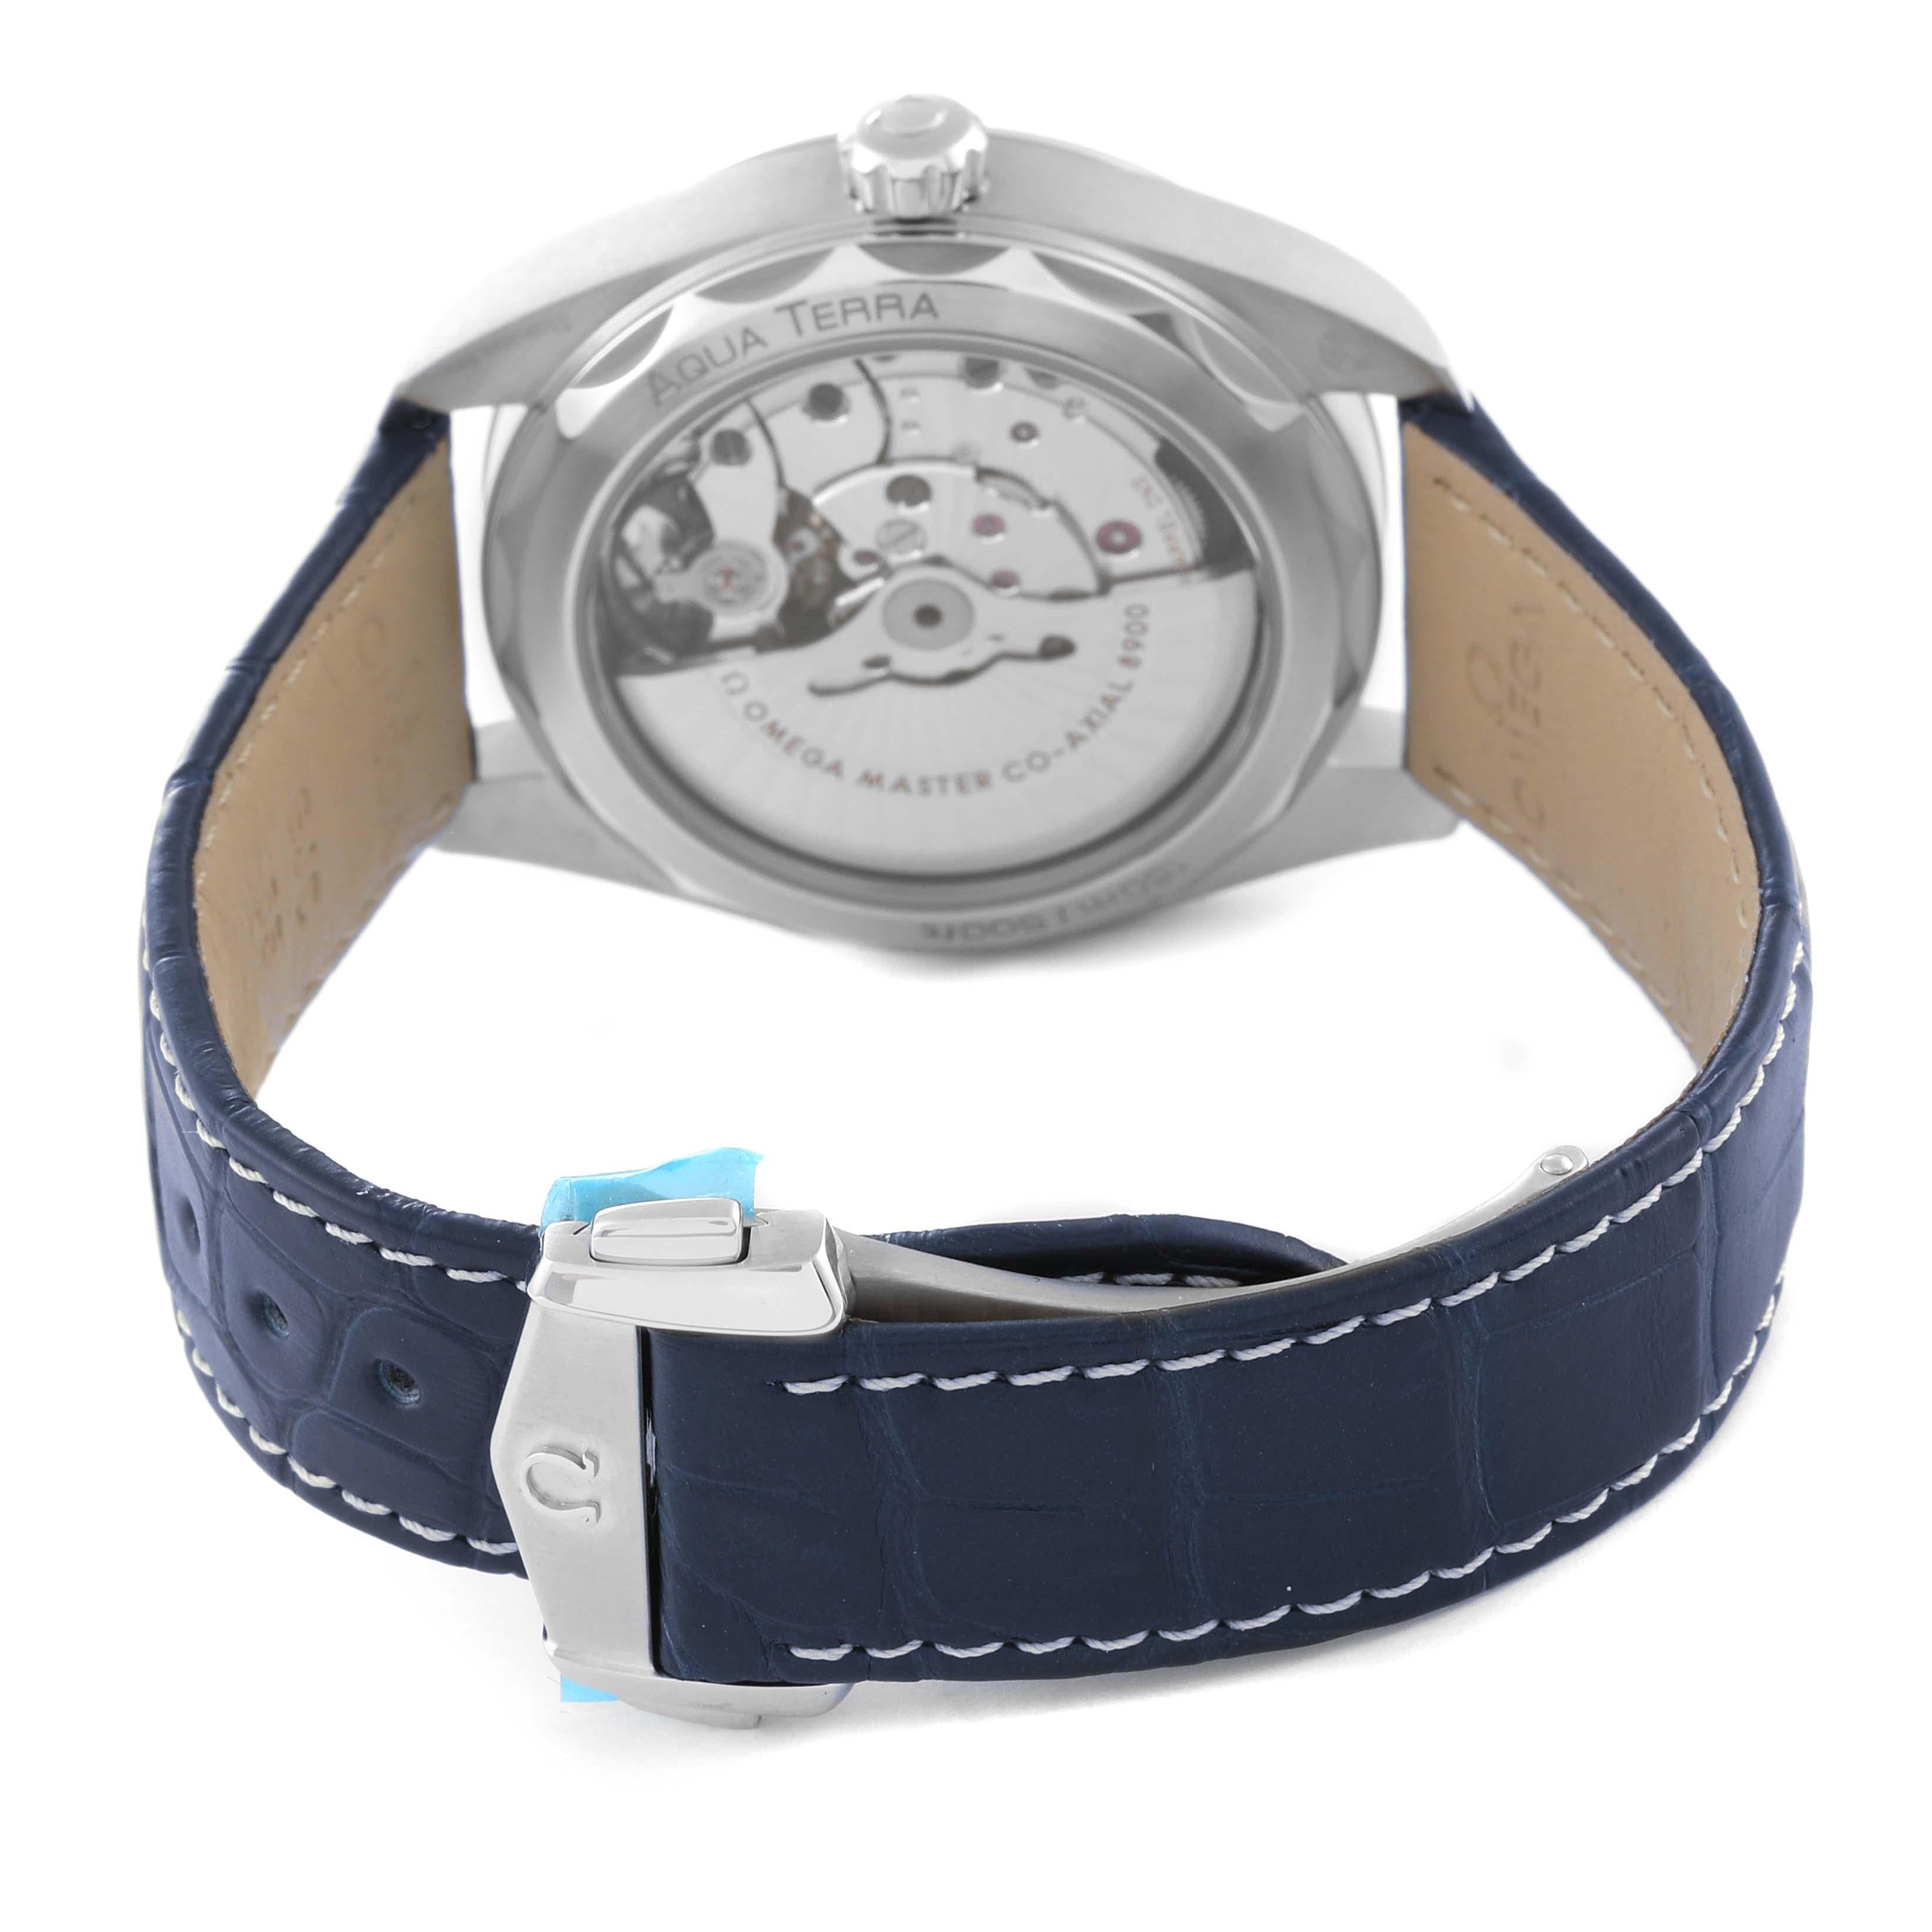 Omega Seamaster Aqua Terra Blue Dial Mens Watch 220.13.41.21.03.002 Unworn For Sale 2